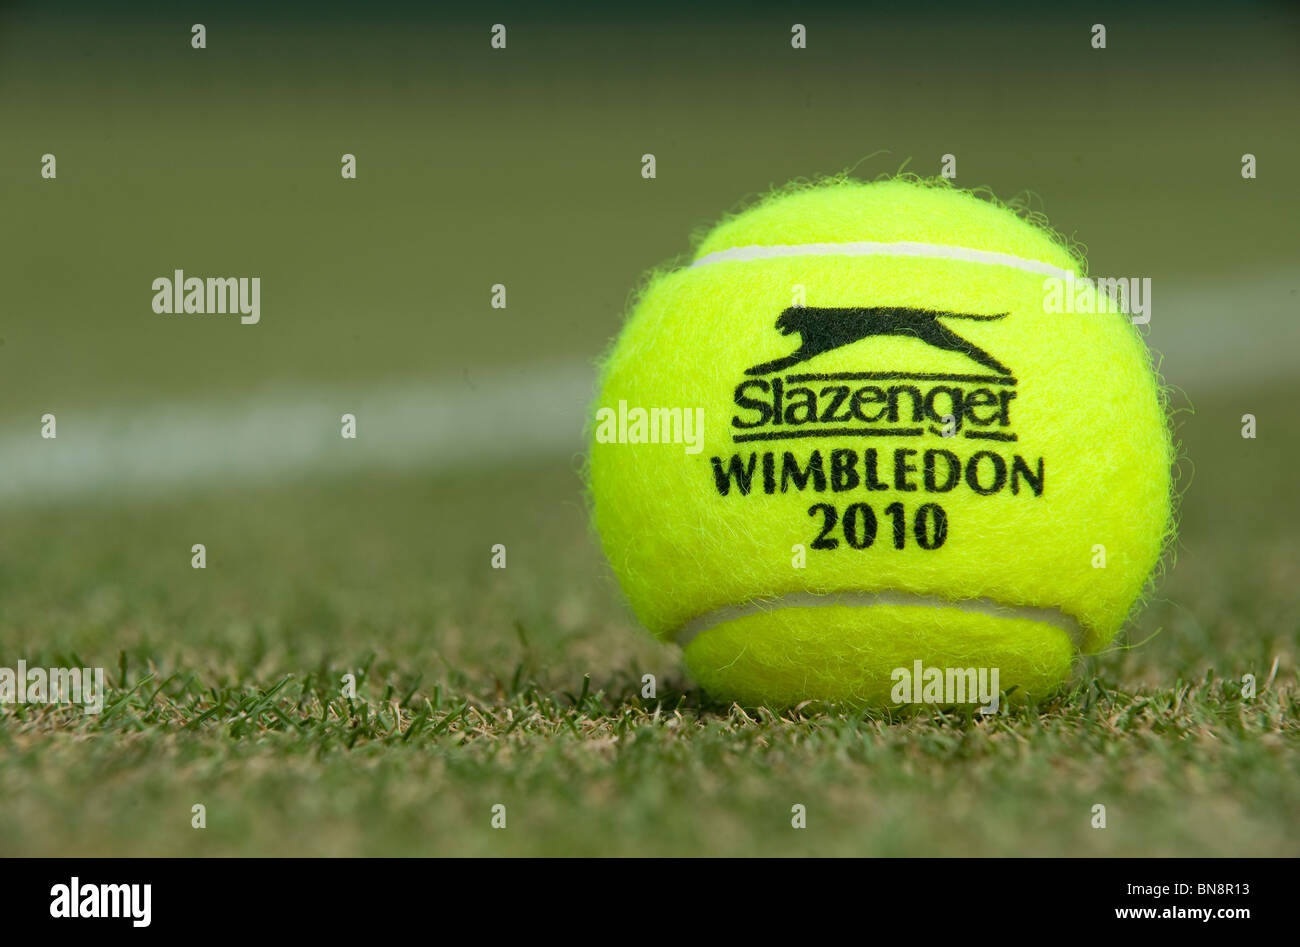 Wimbledon 2010 Slazenger Tennisball sitzt auf einem Rasenplatz während  Wimbledon Tennis Championships 2010 Stockfotografie - Alamy